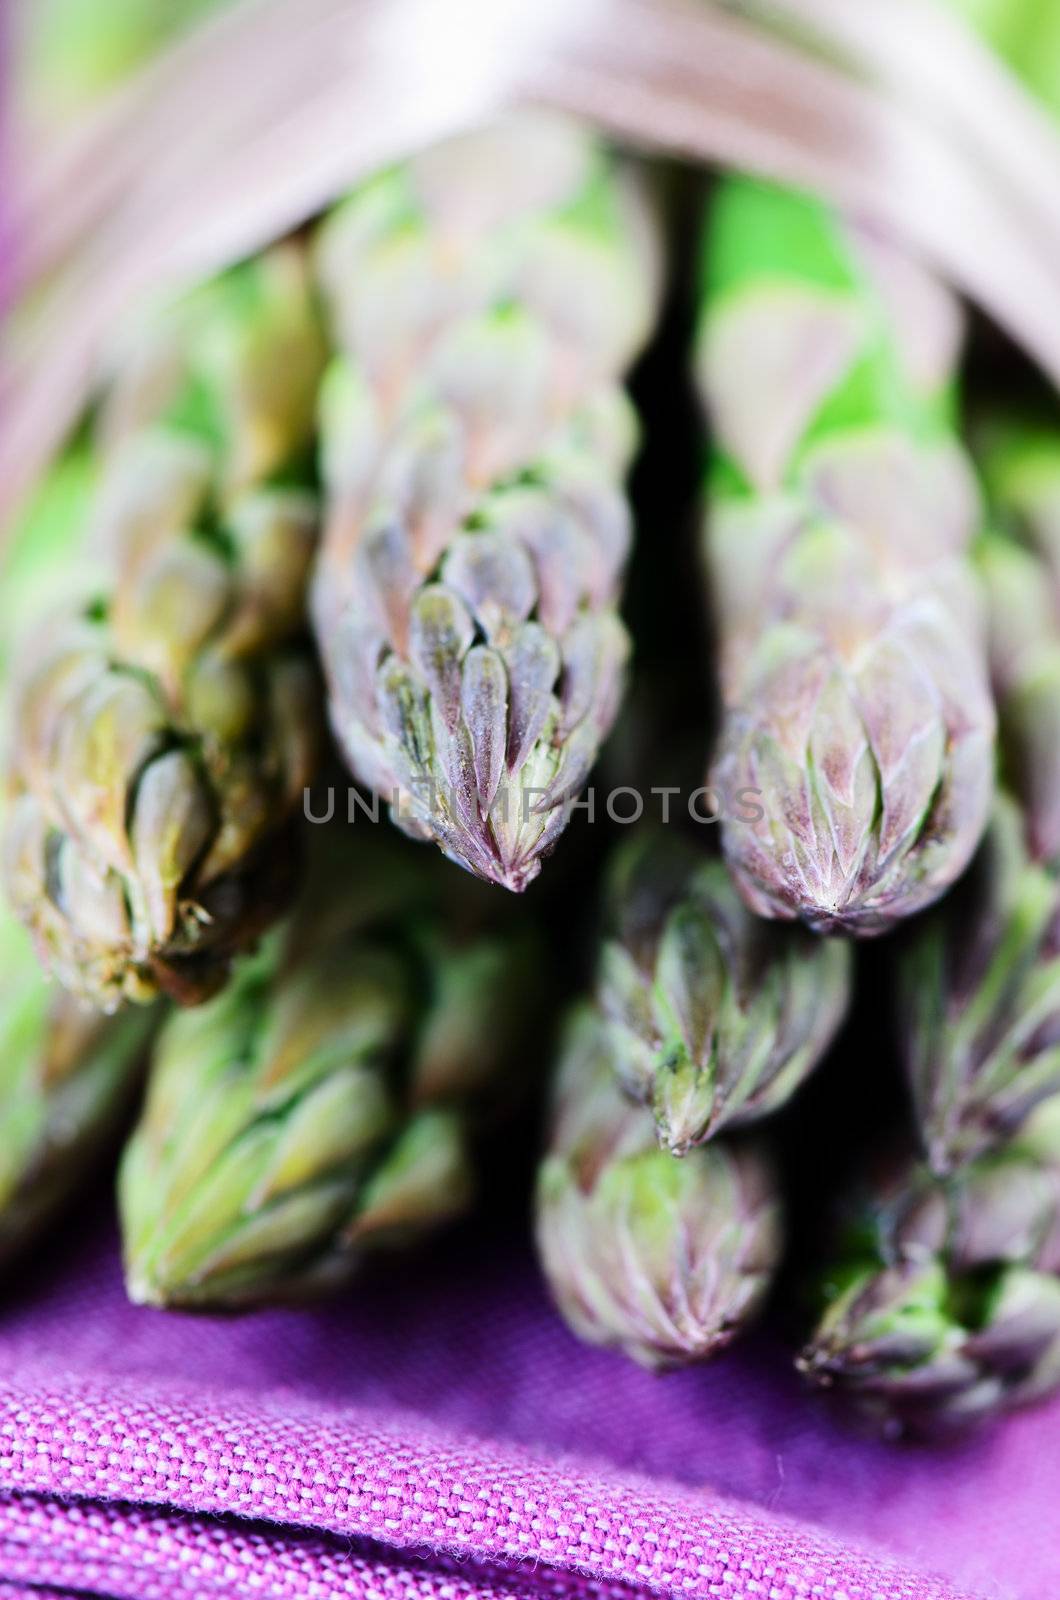 Bunch of asparagus on napkin by Nanisimova